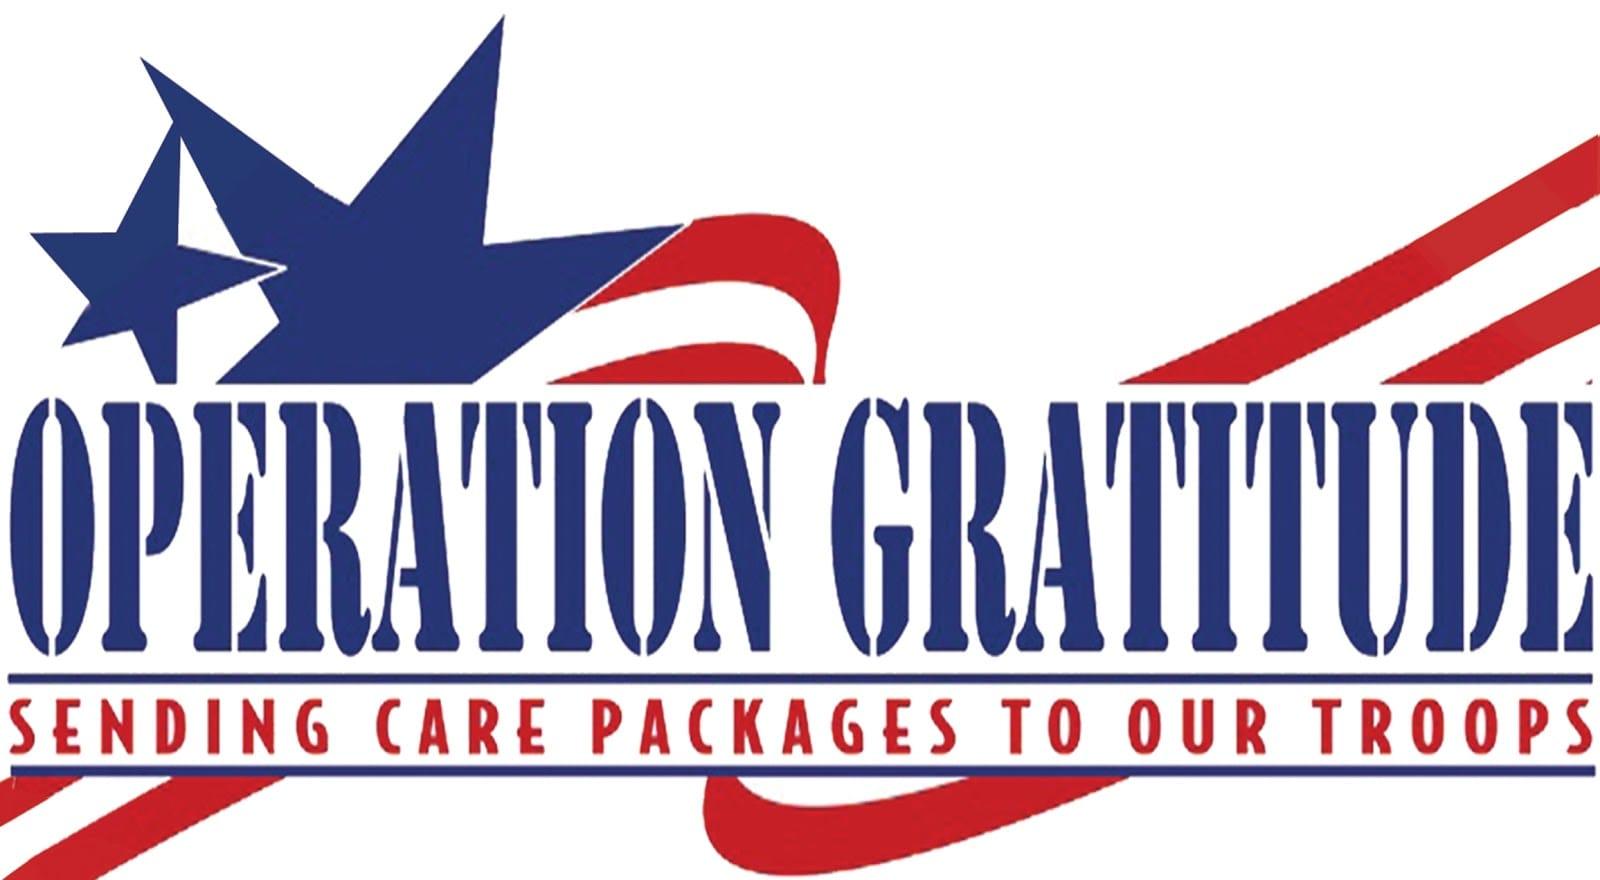 Operation Gratitude Logo